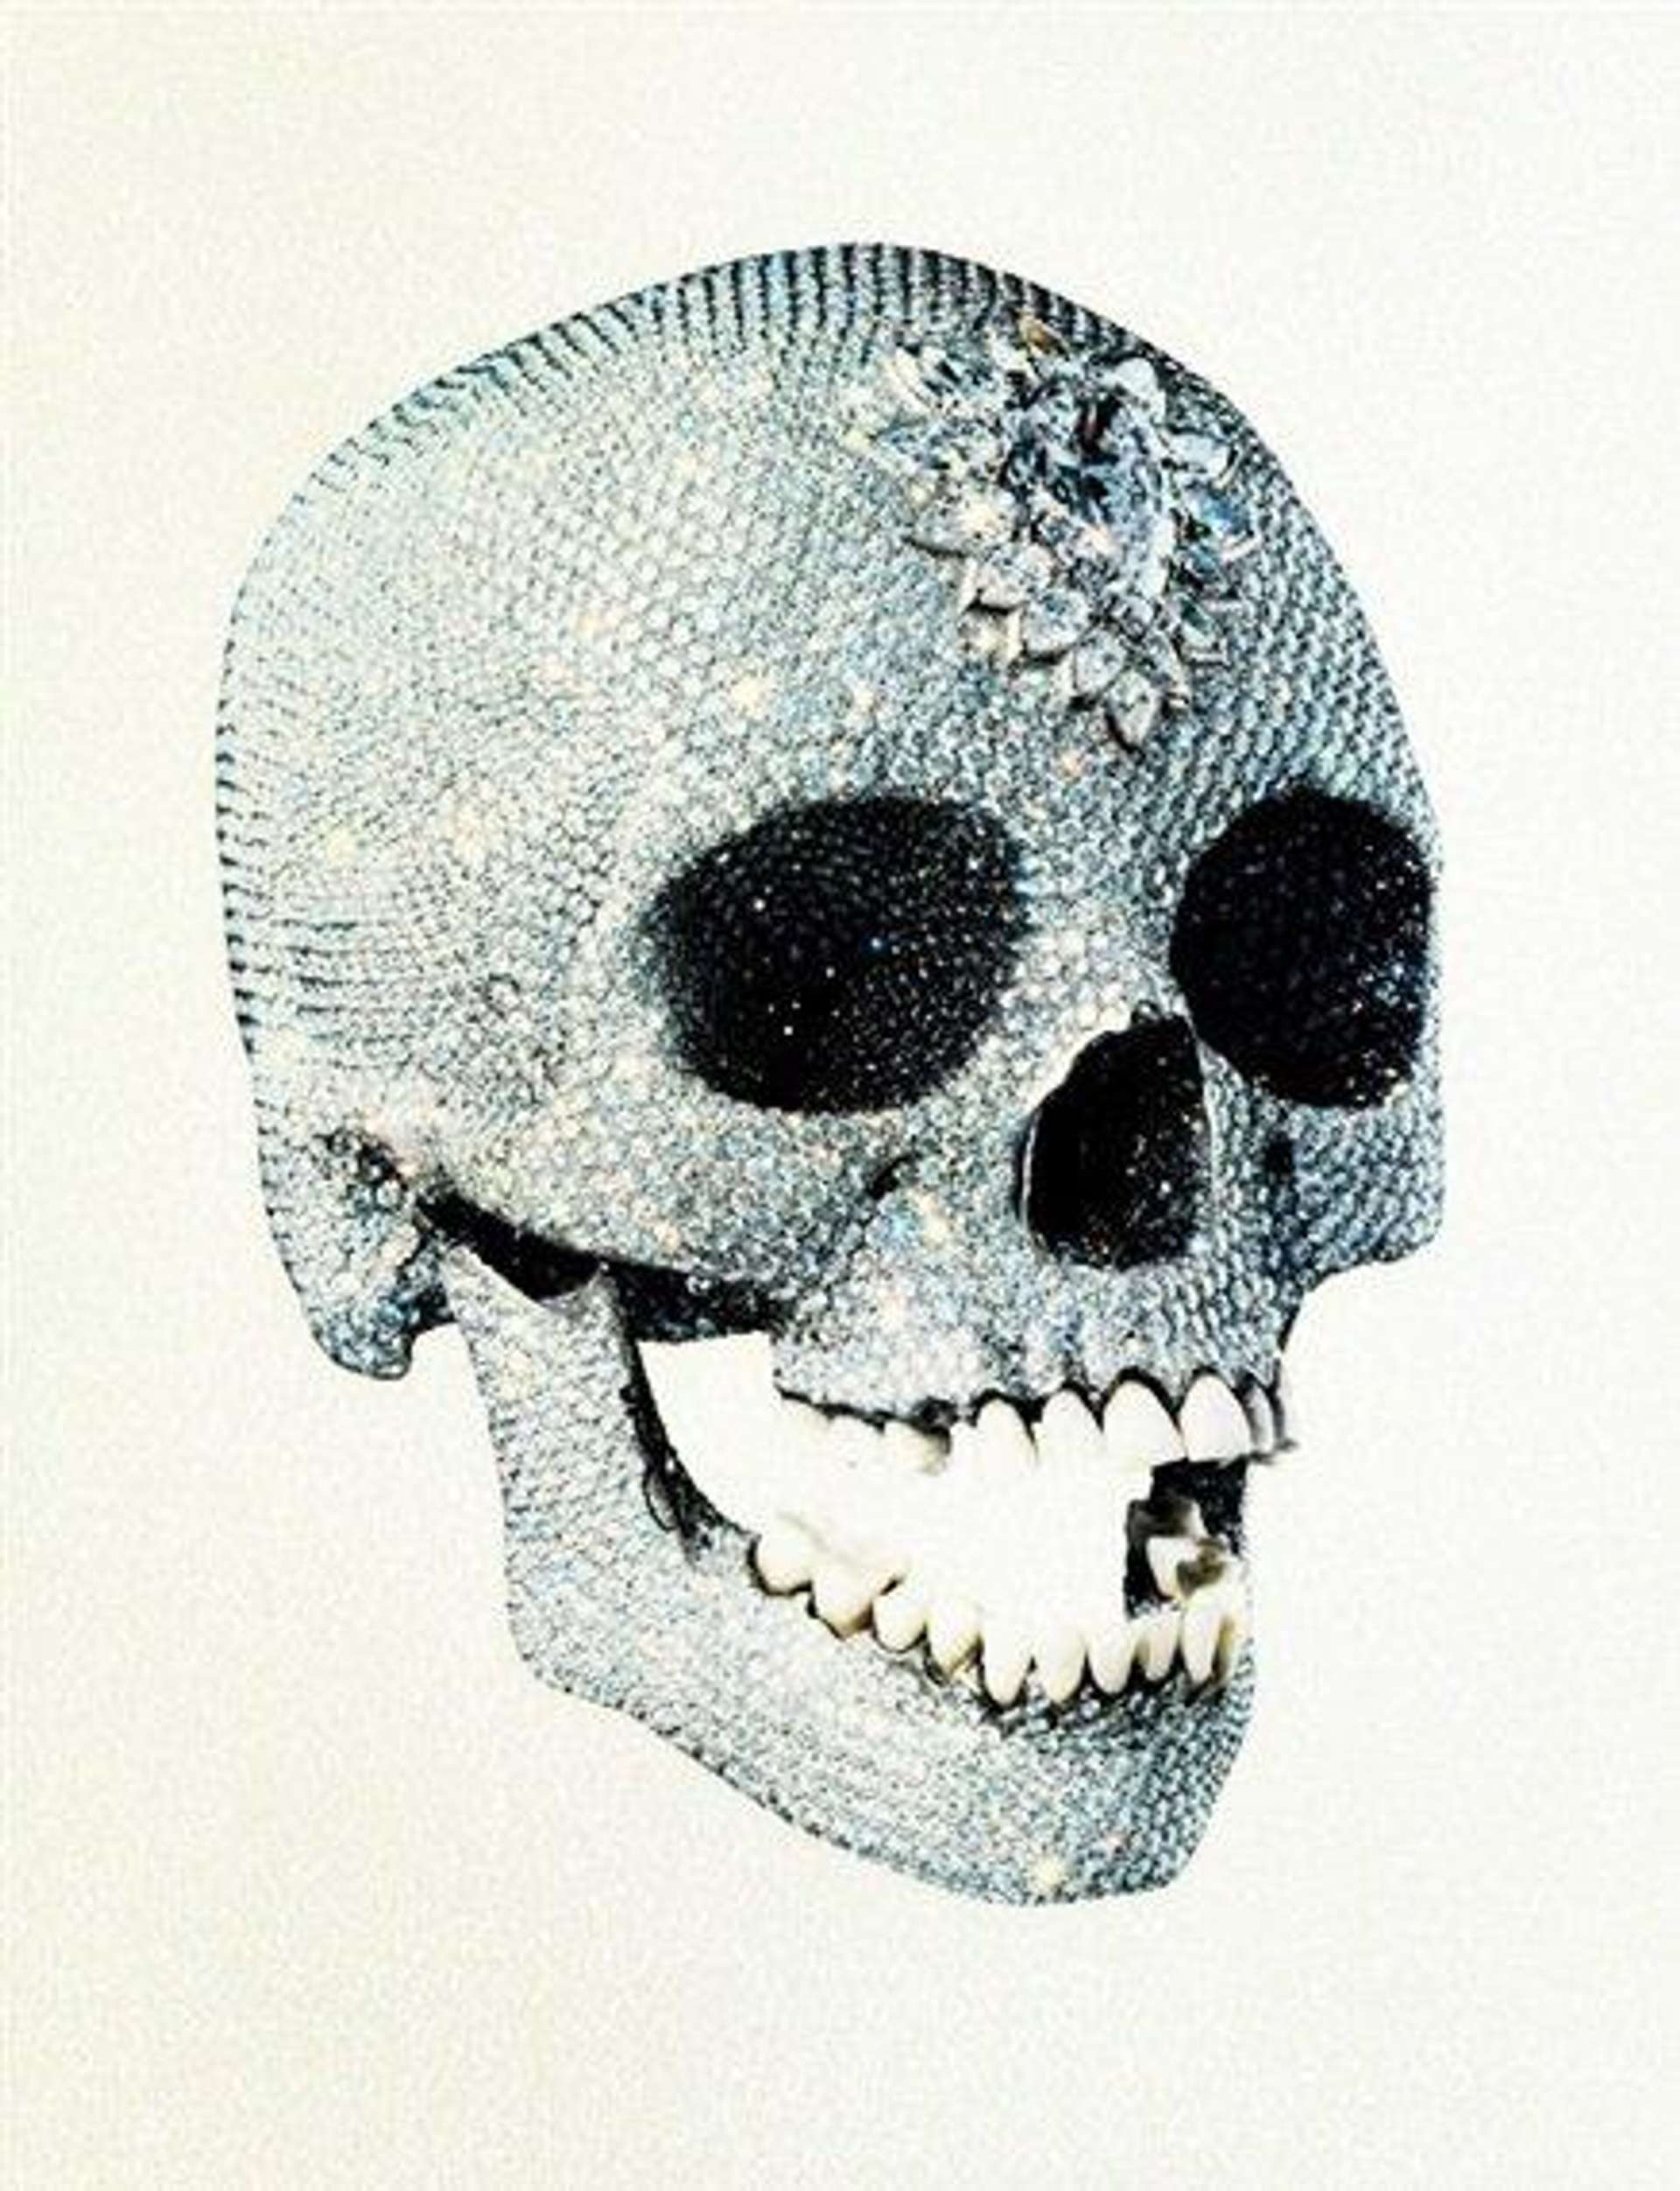 Side profile close up of diamond encrusted human skill